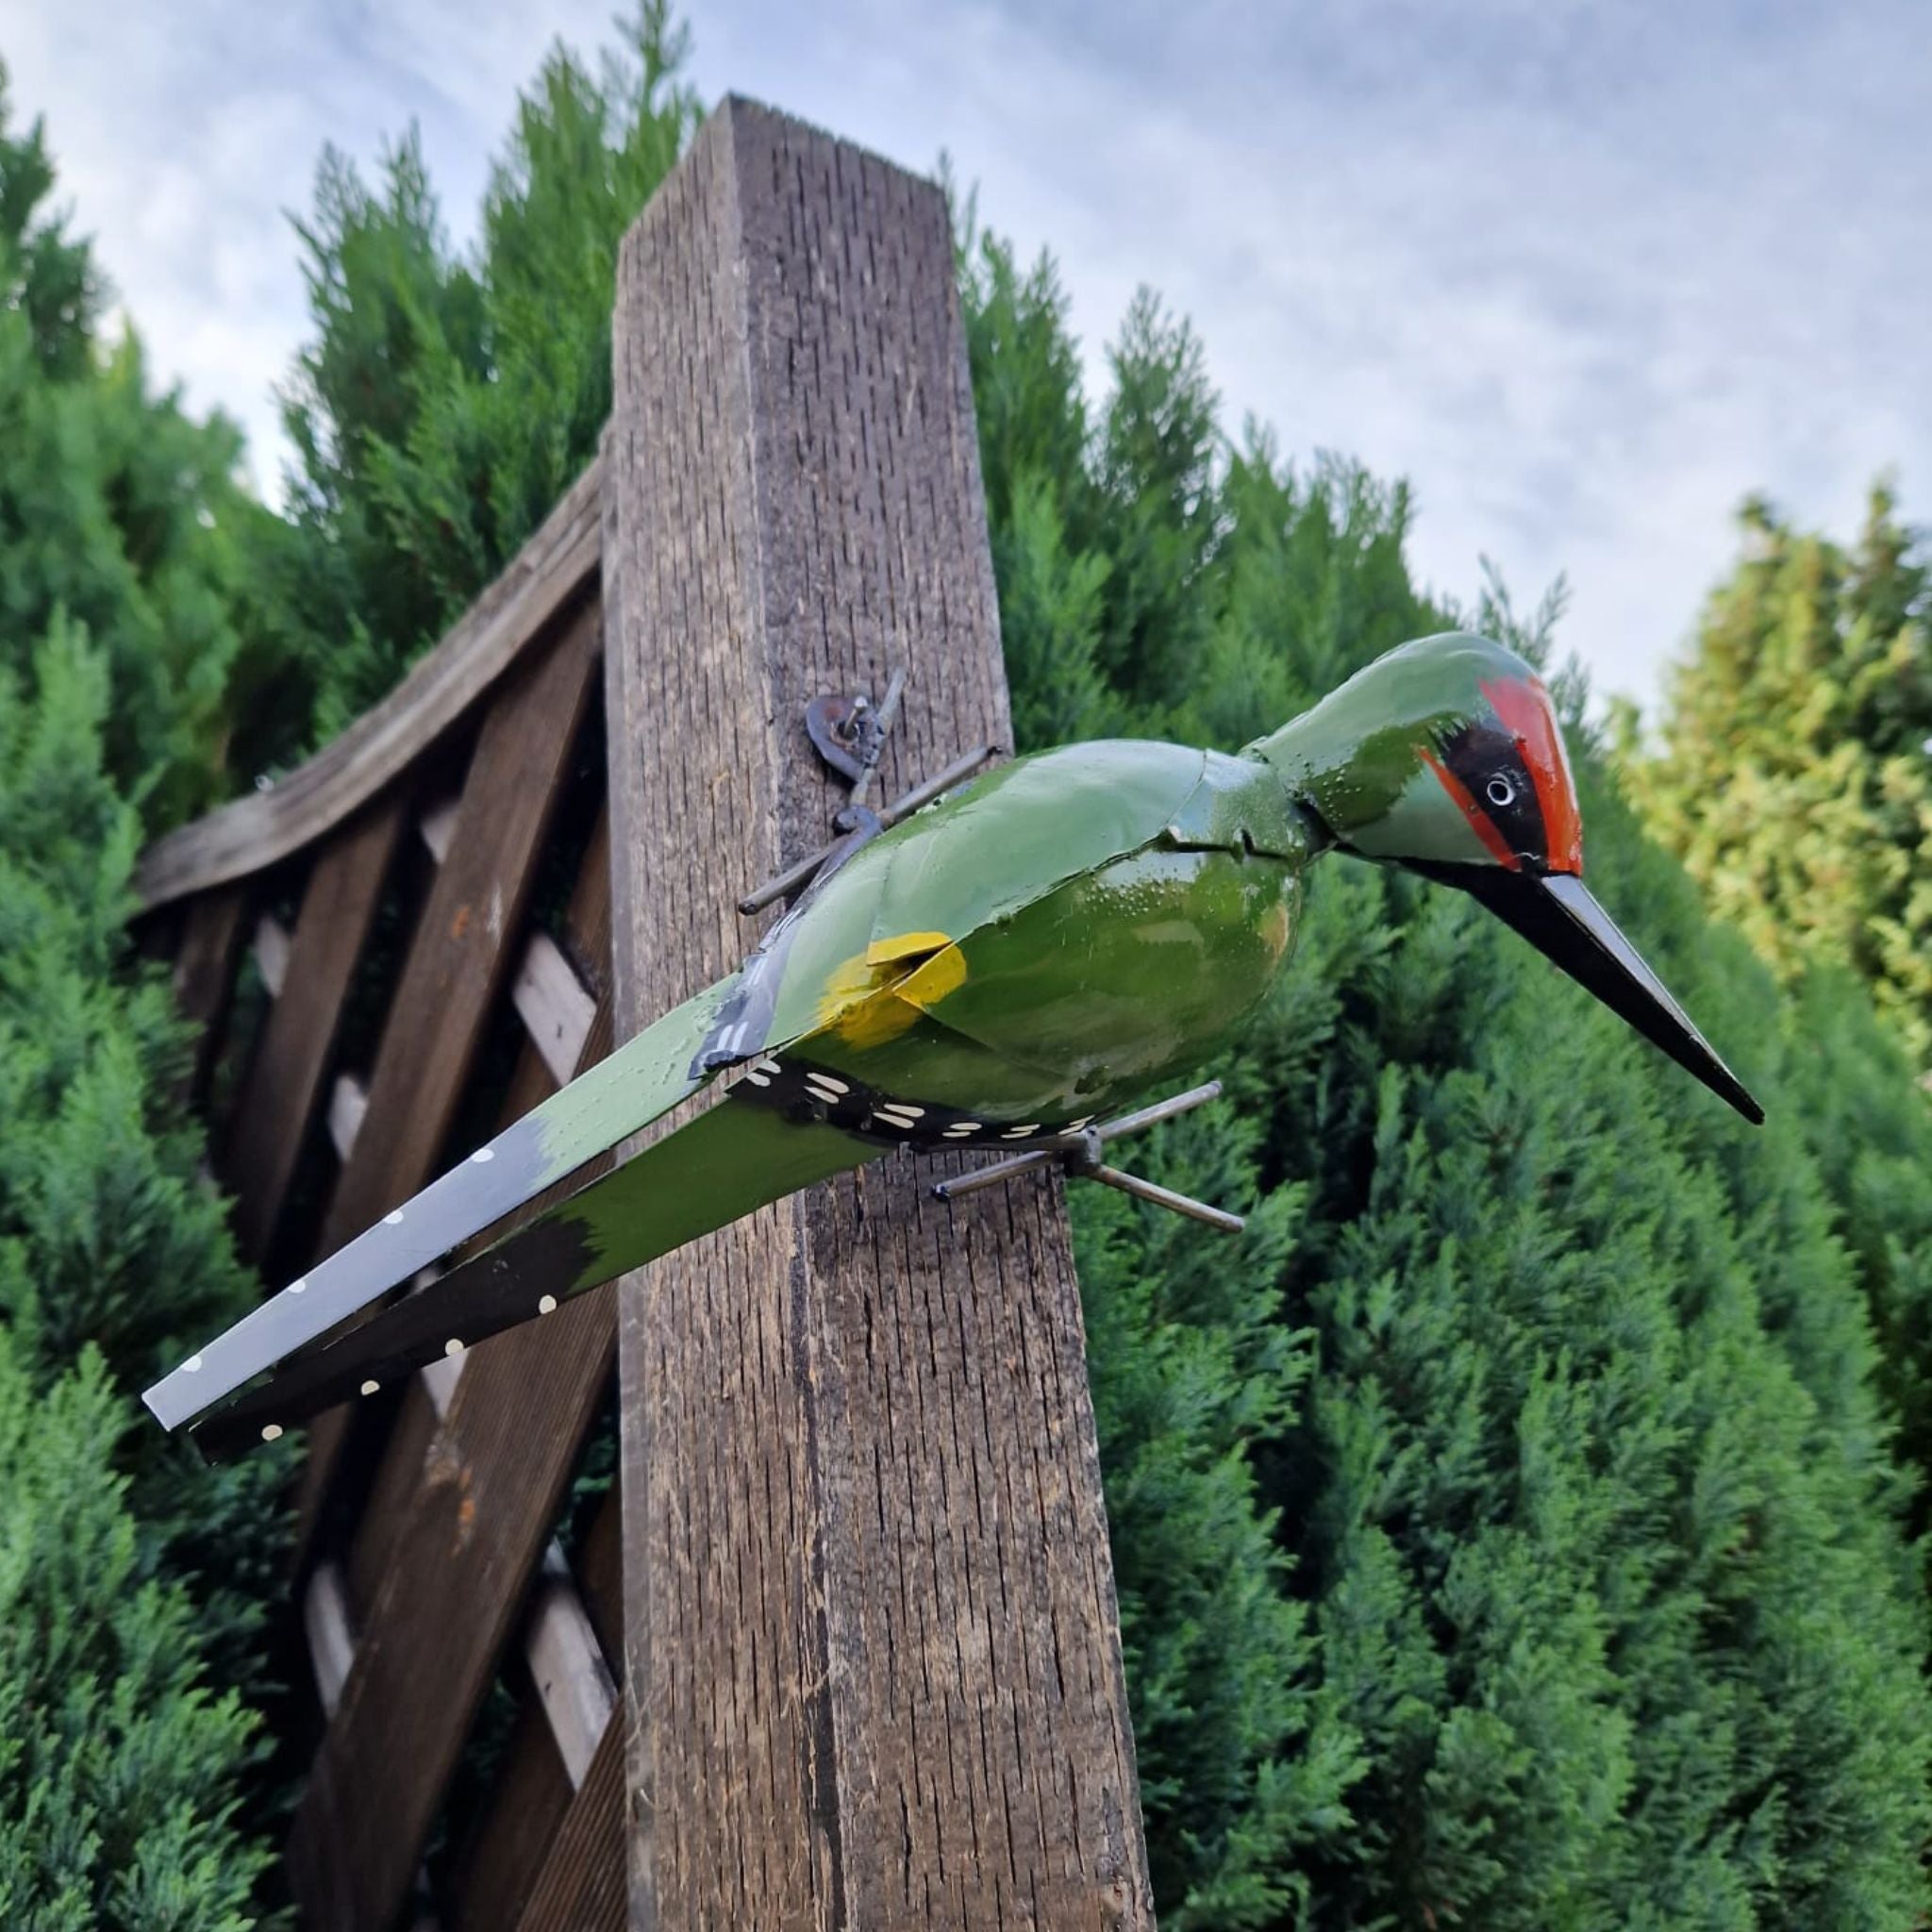 Woodpecker - Pangea Sculptures